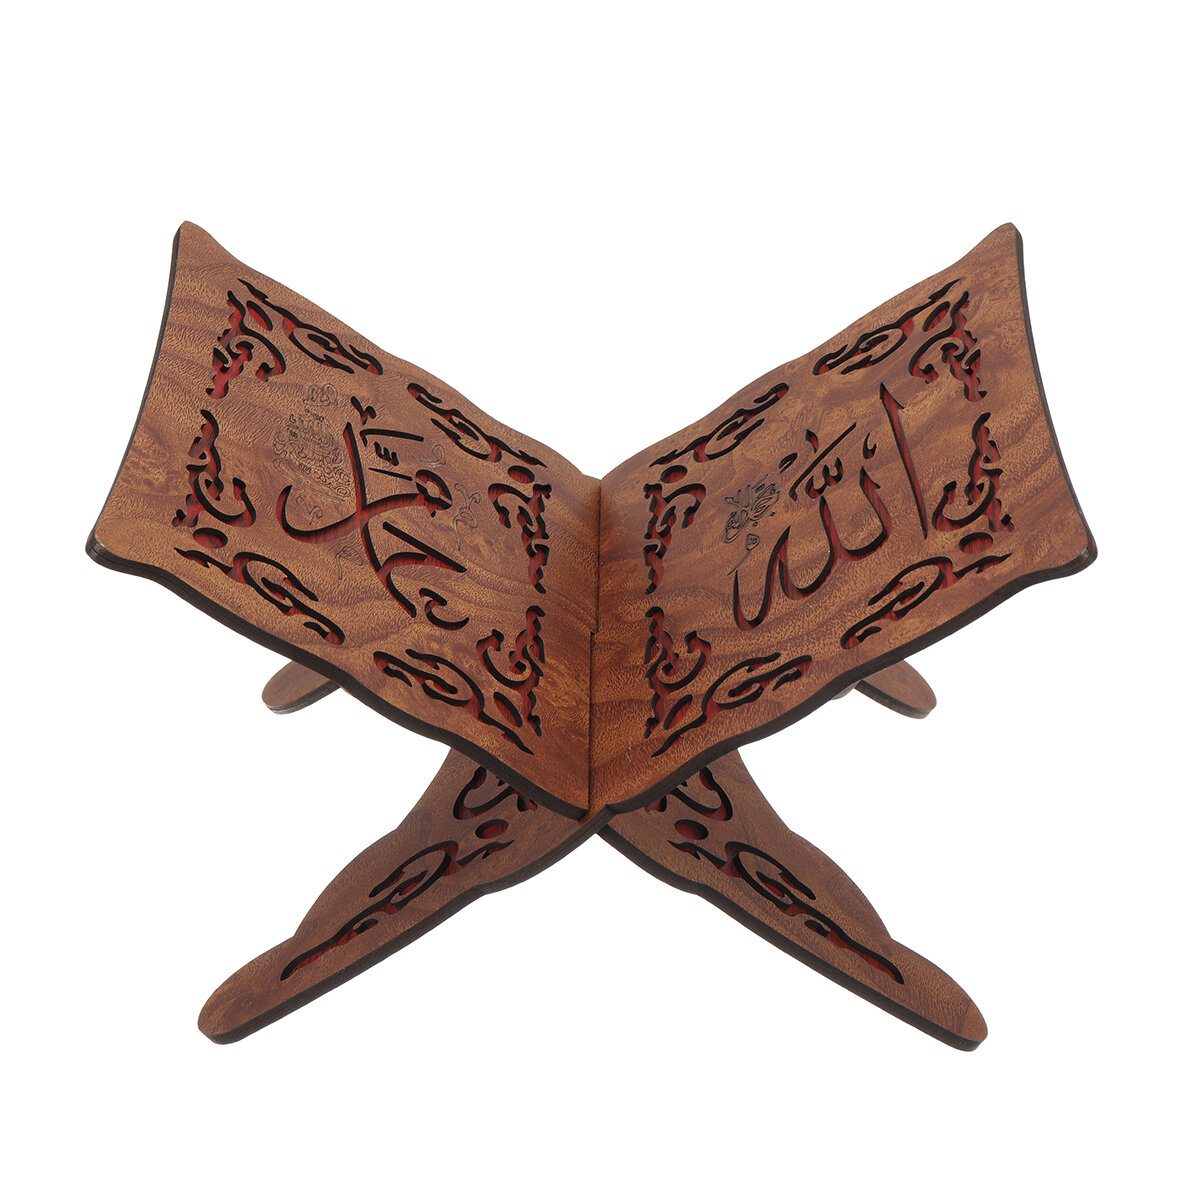 Ik slamic Quran Koran Book Holder Wood Stand For Quran Home Decorations